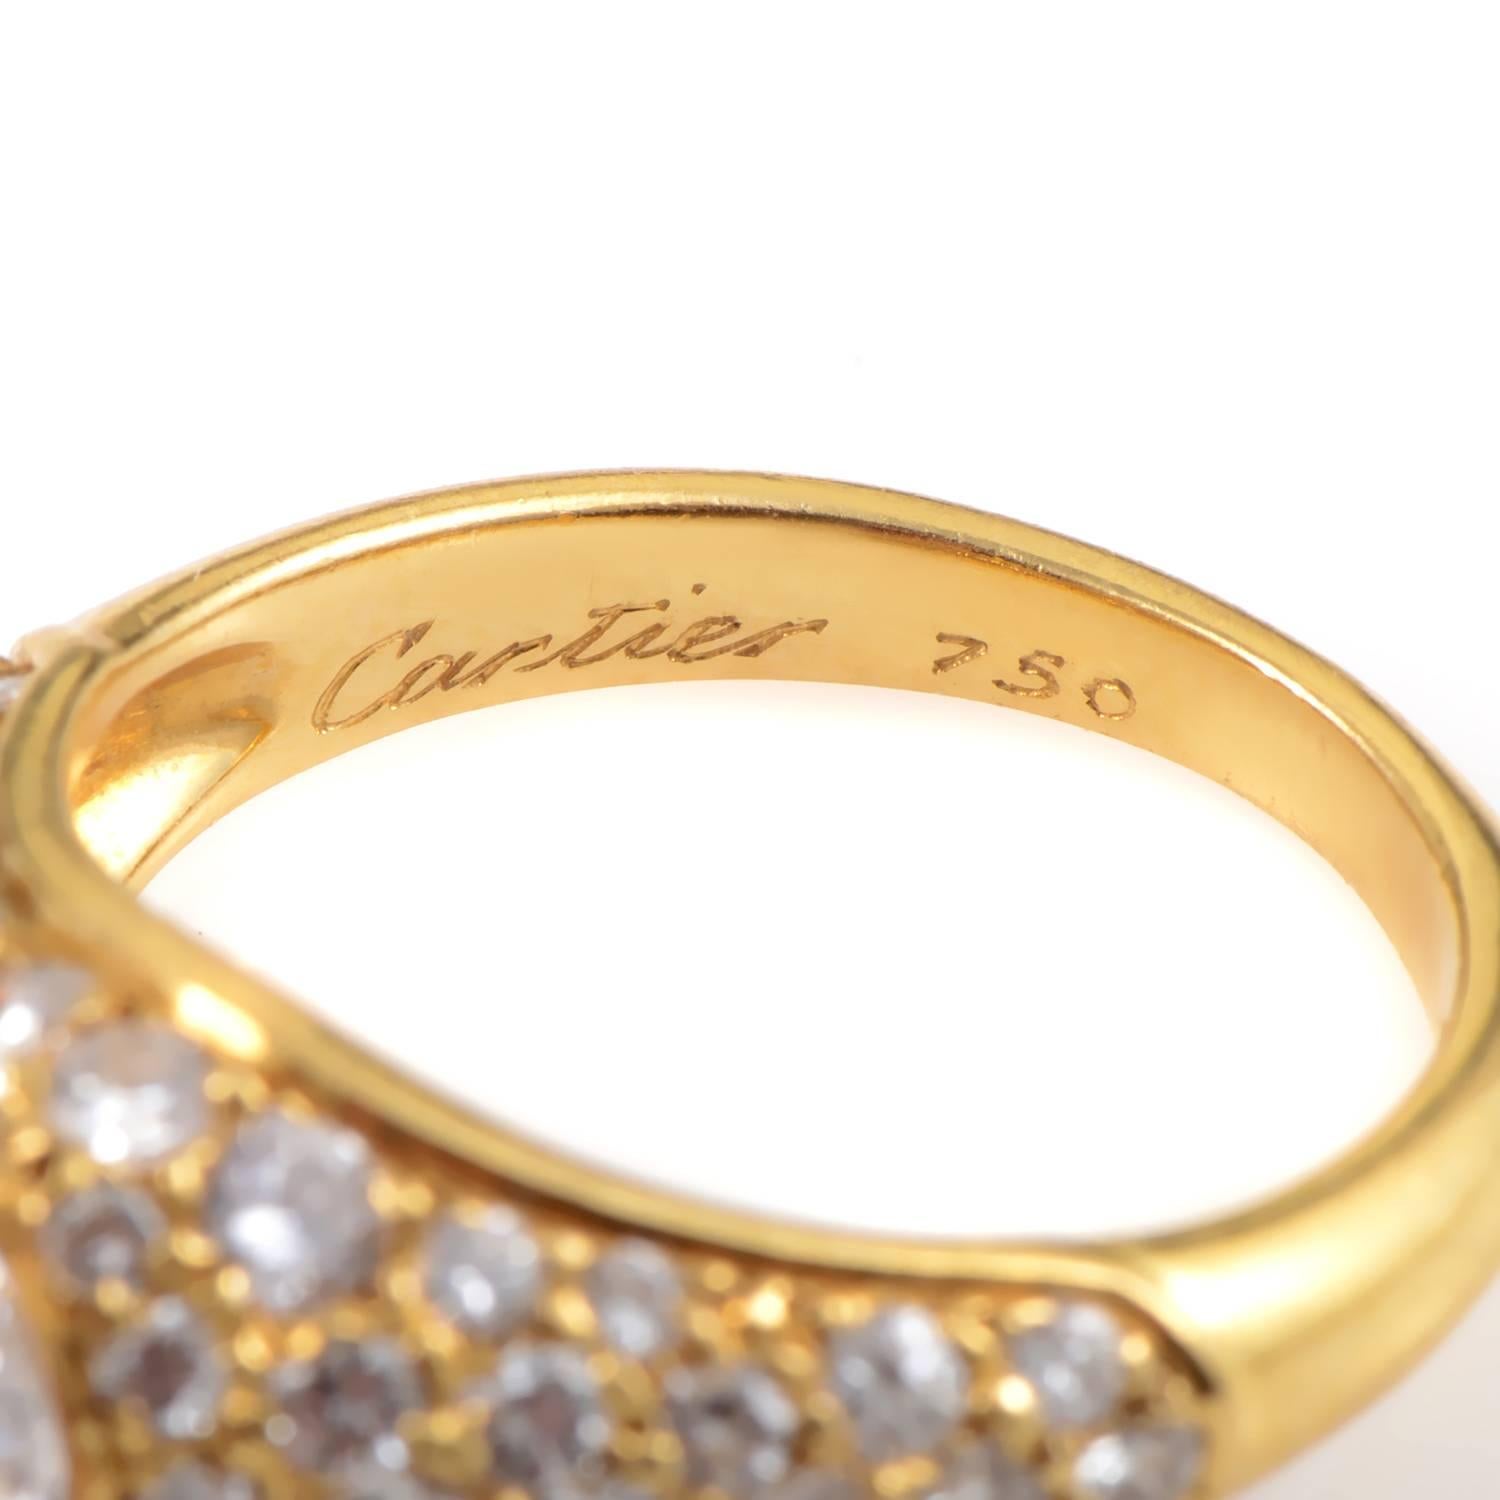 1.25 carat marquise diamond ring